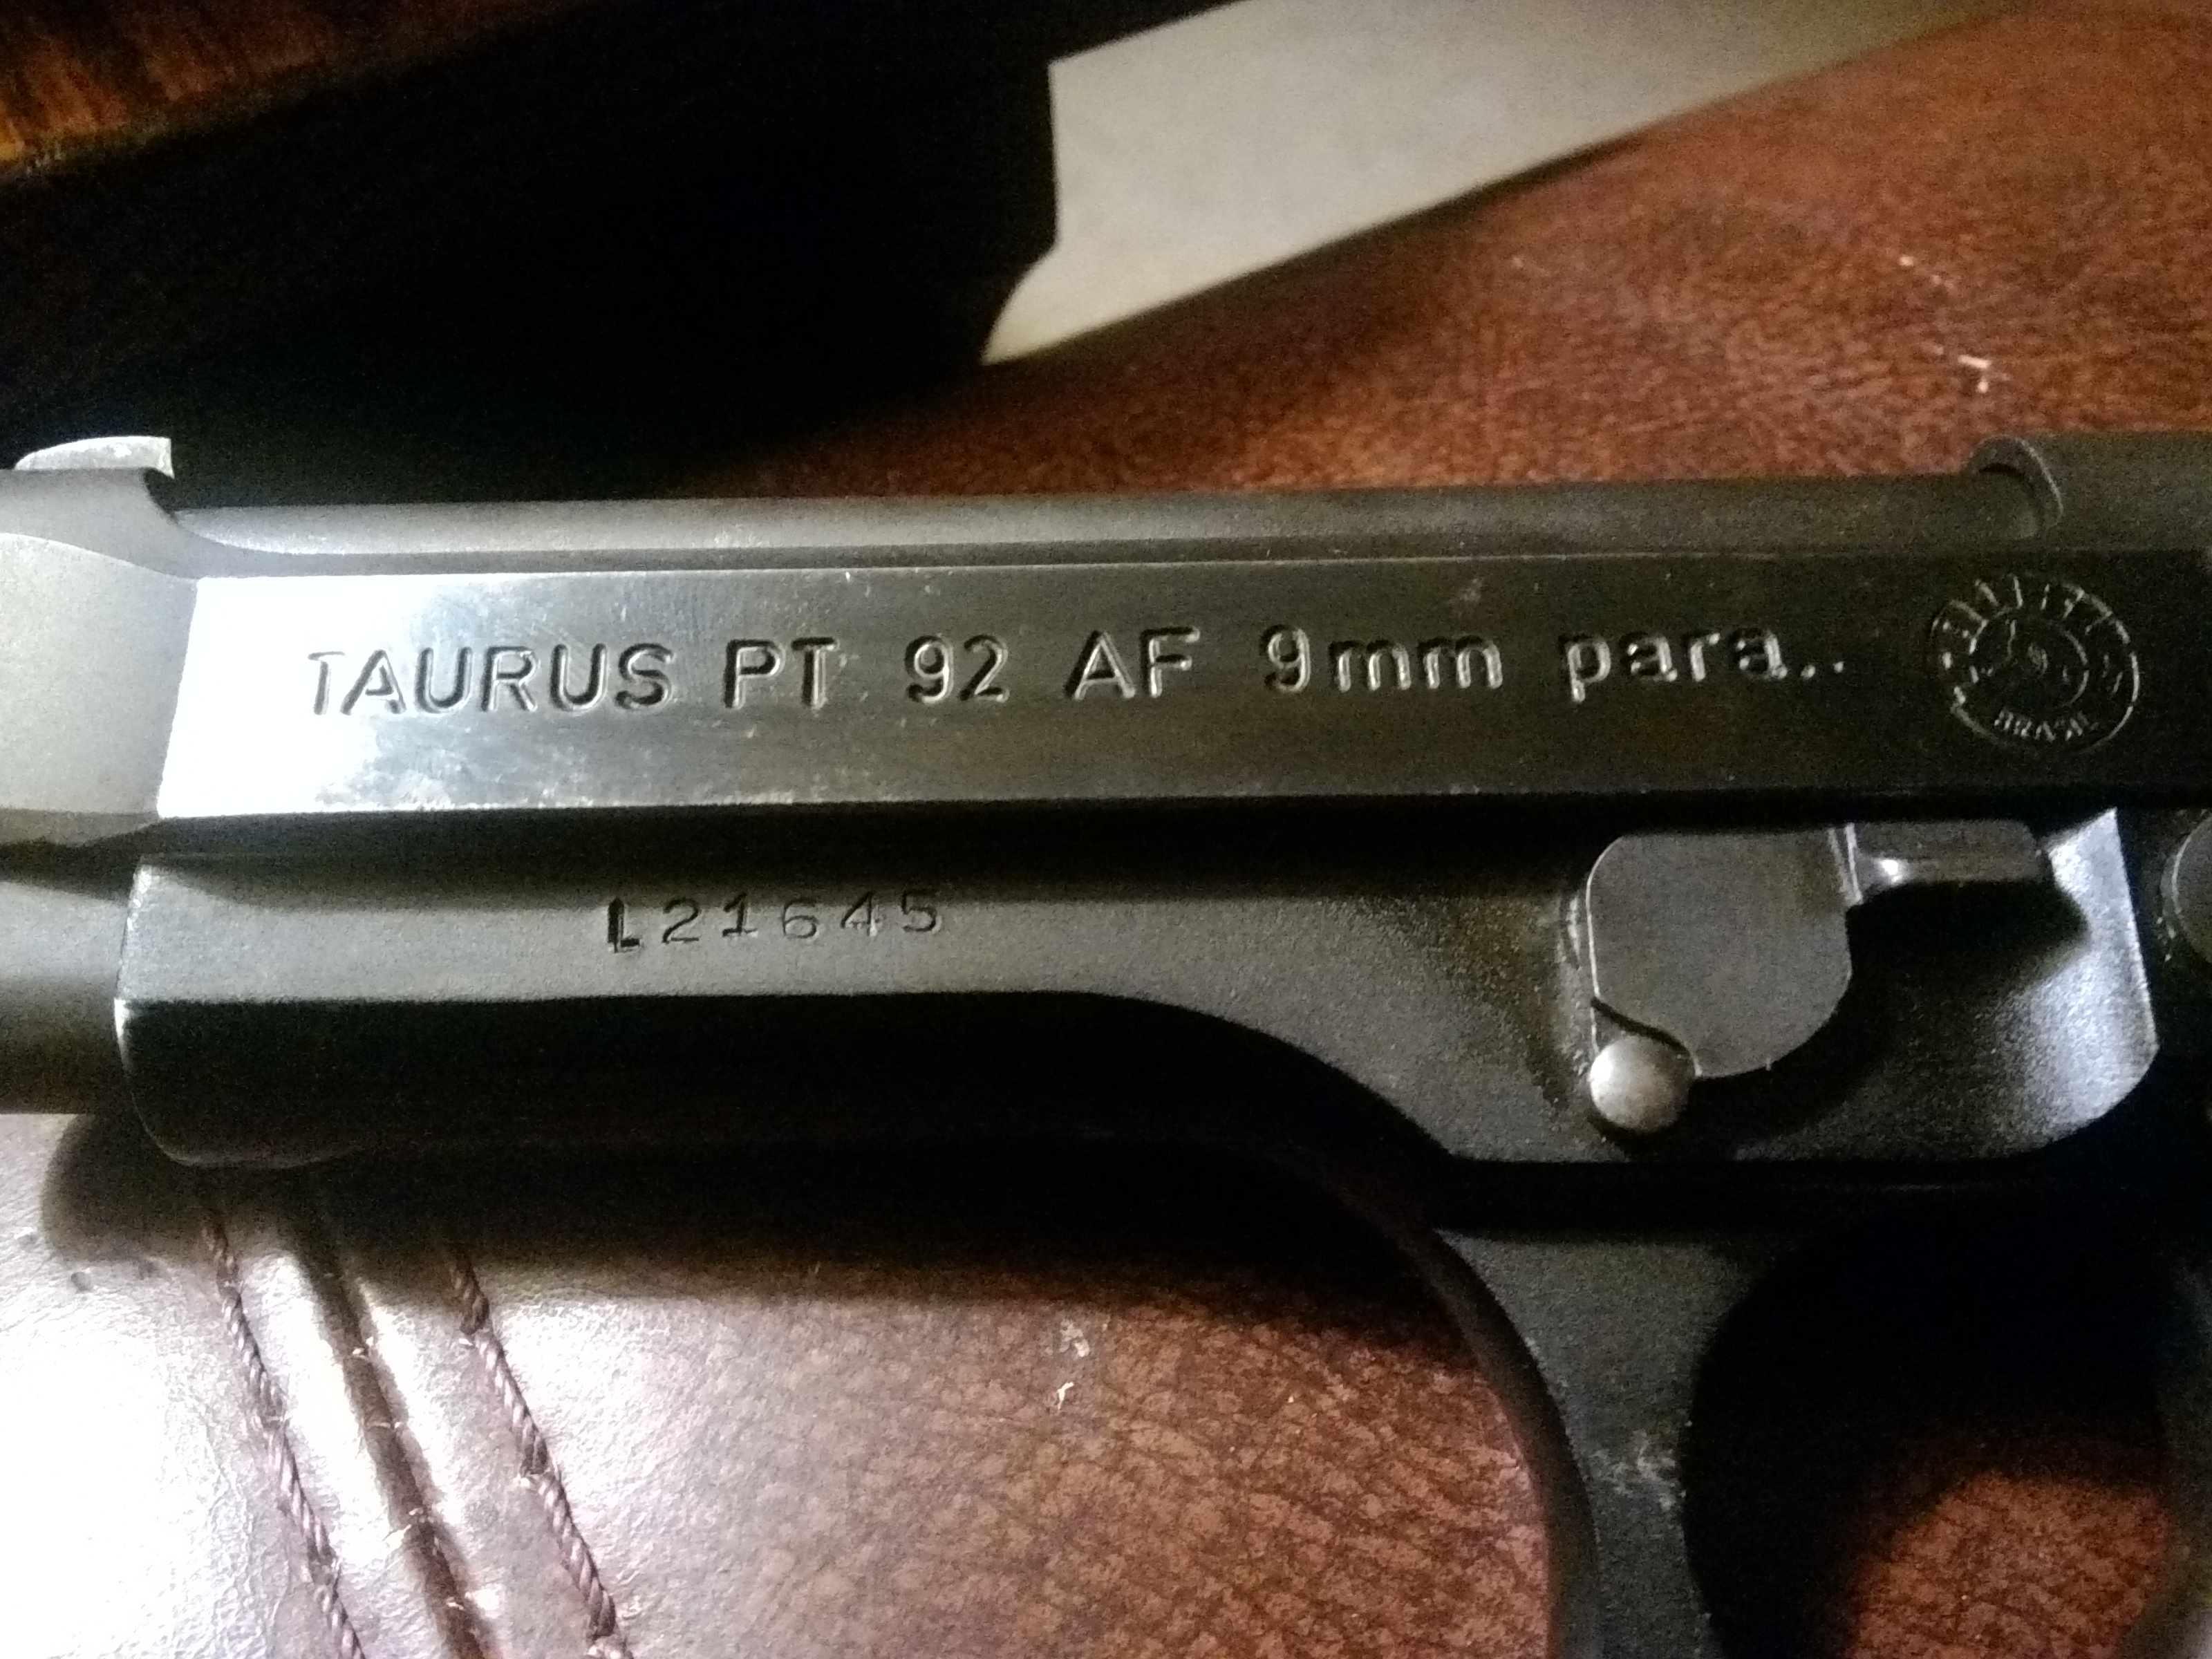 Taurus serial number